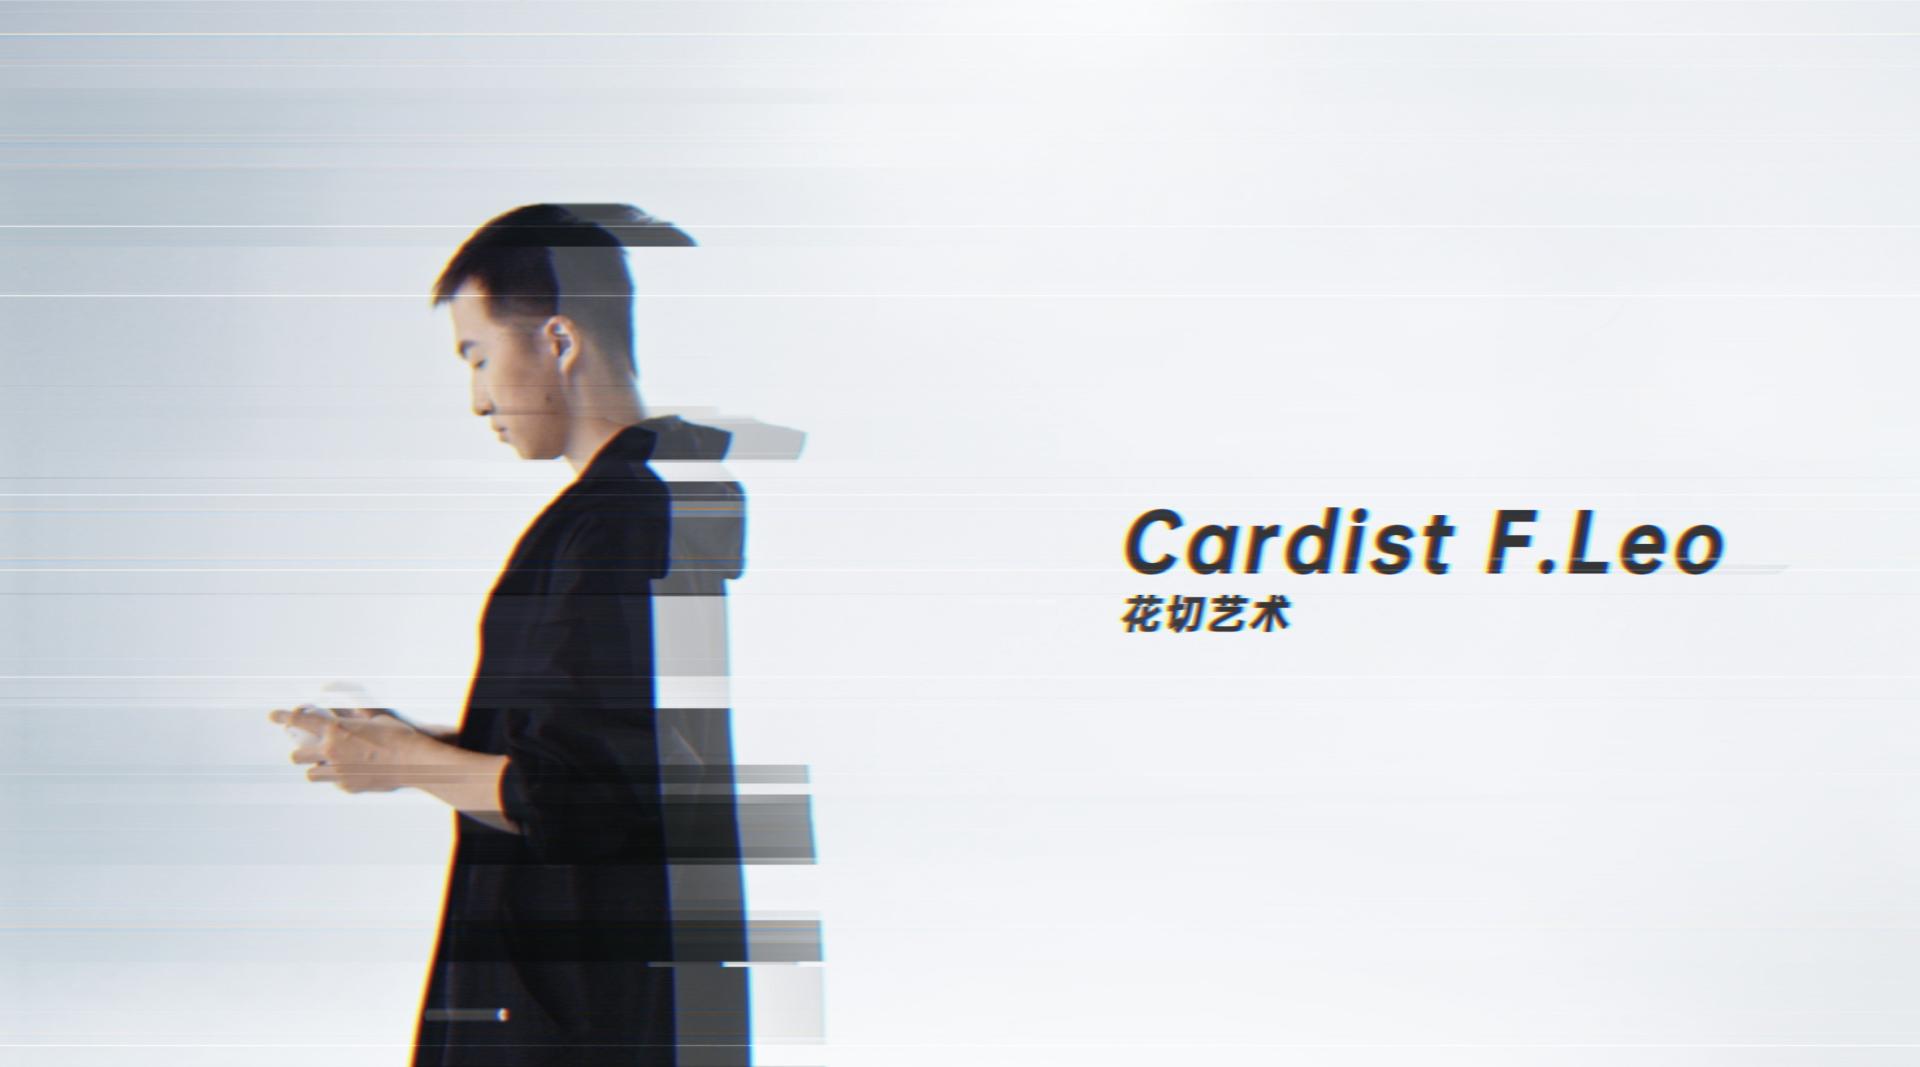 Cardist F.Leo 花切艺术（2018）